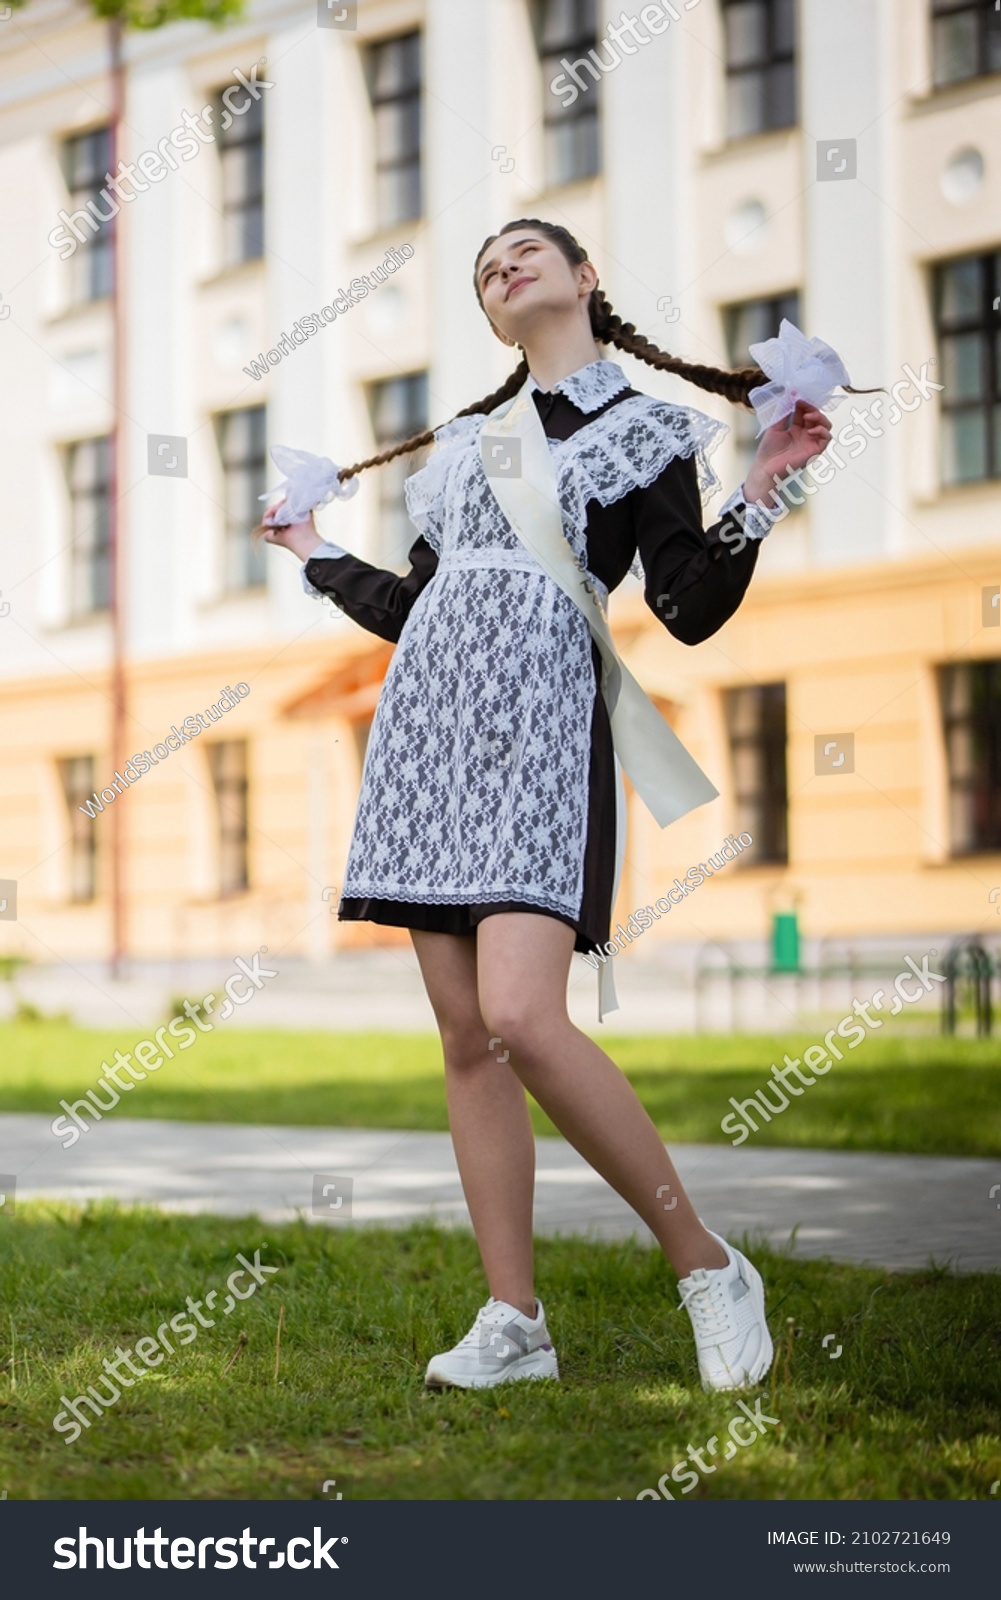 clive betts share russian school girl uniform photos